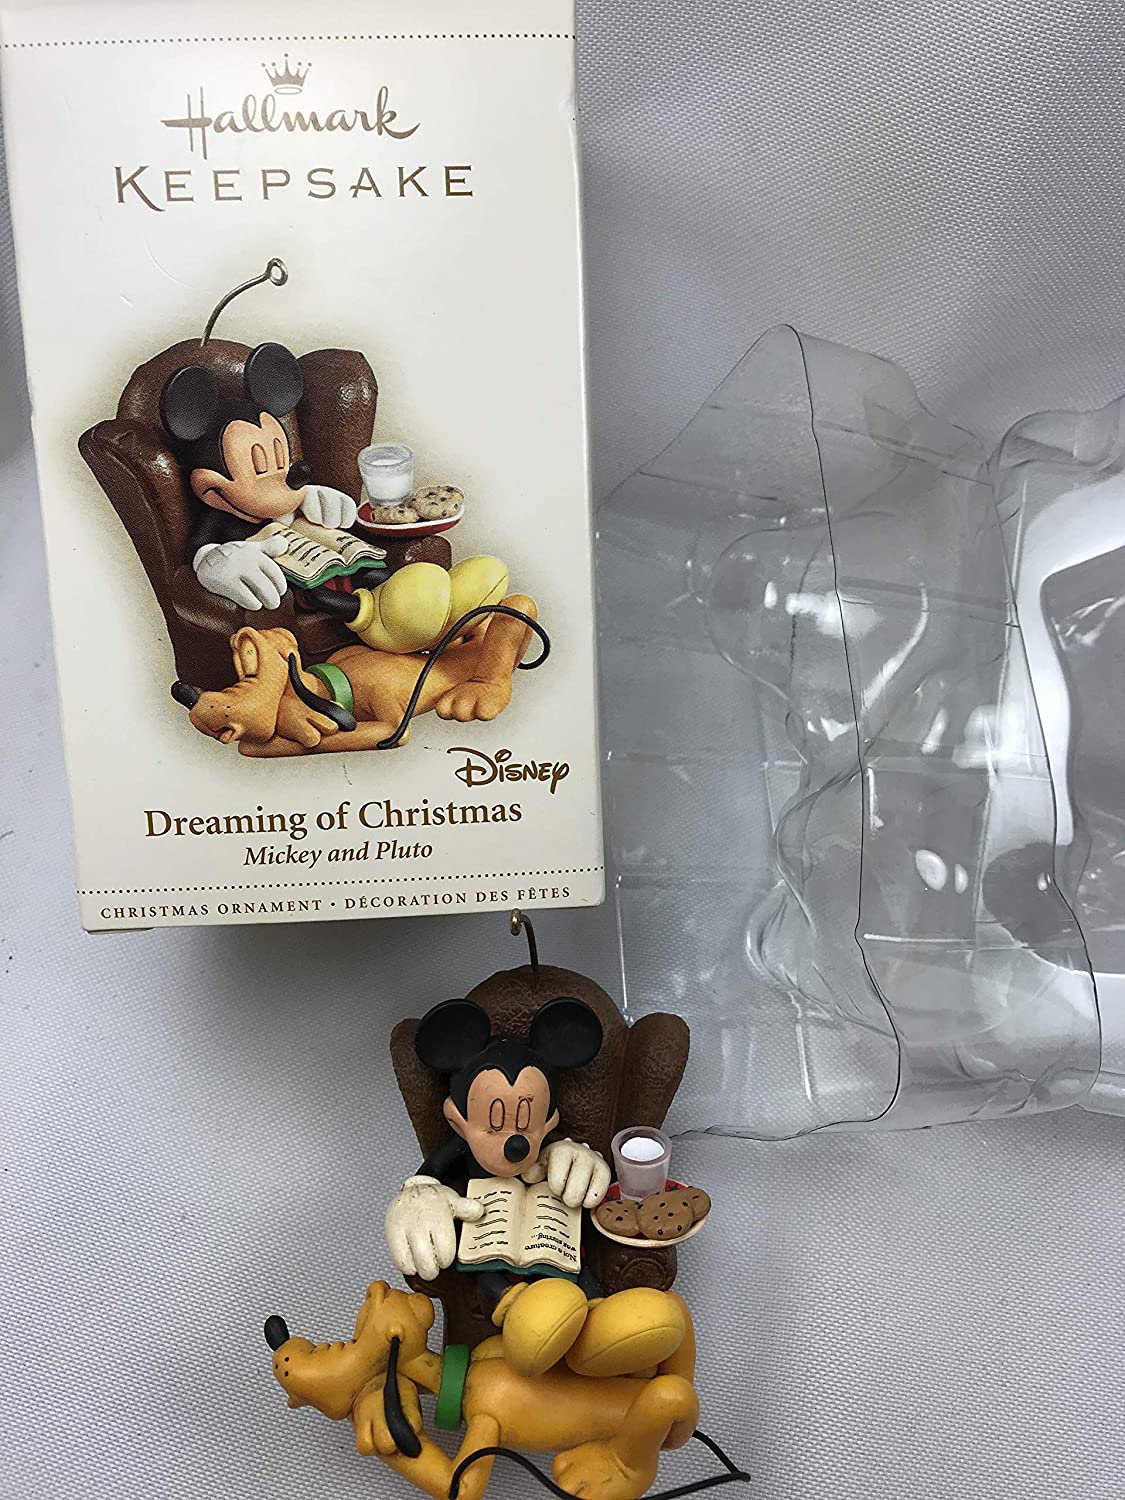 Dreaming of Christmas Mickey and Pluto 2006 Disney Hallmark Ornament QXD8306 - new